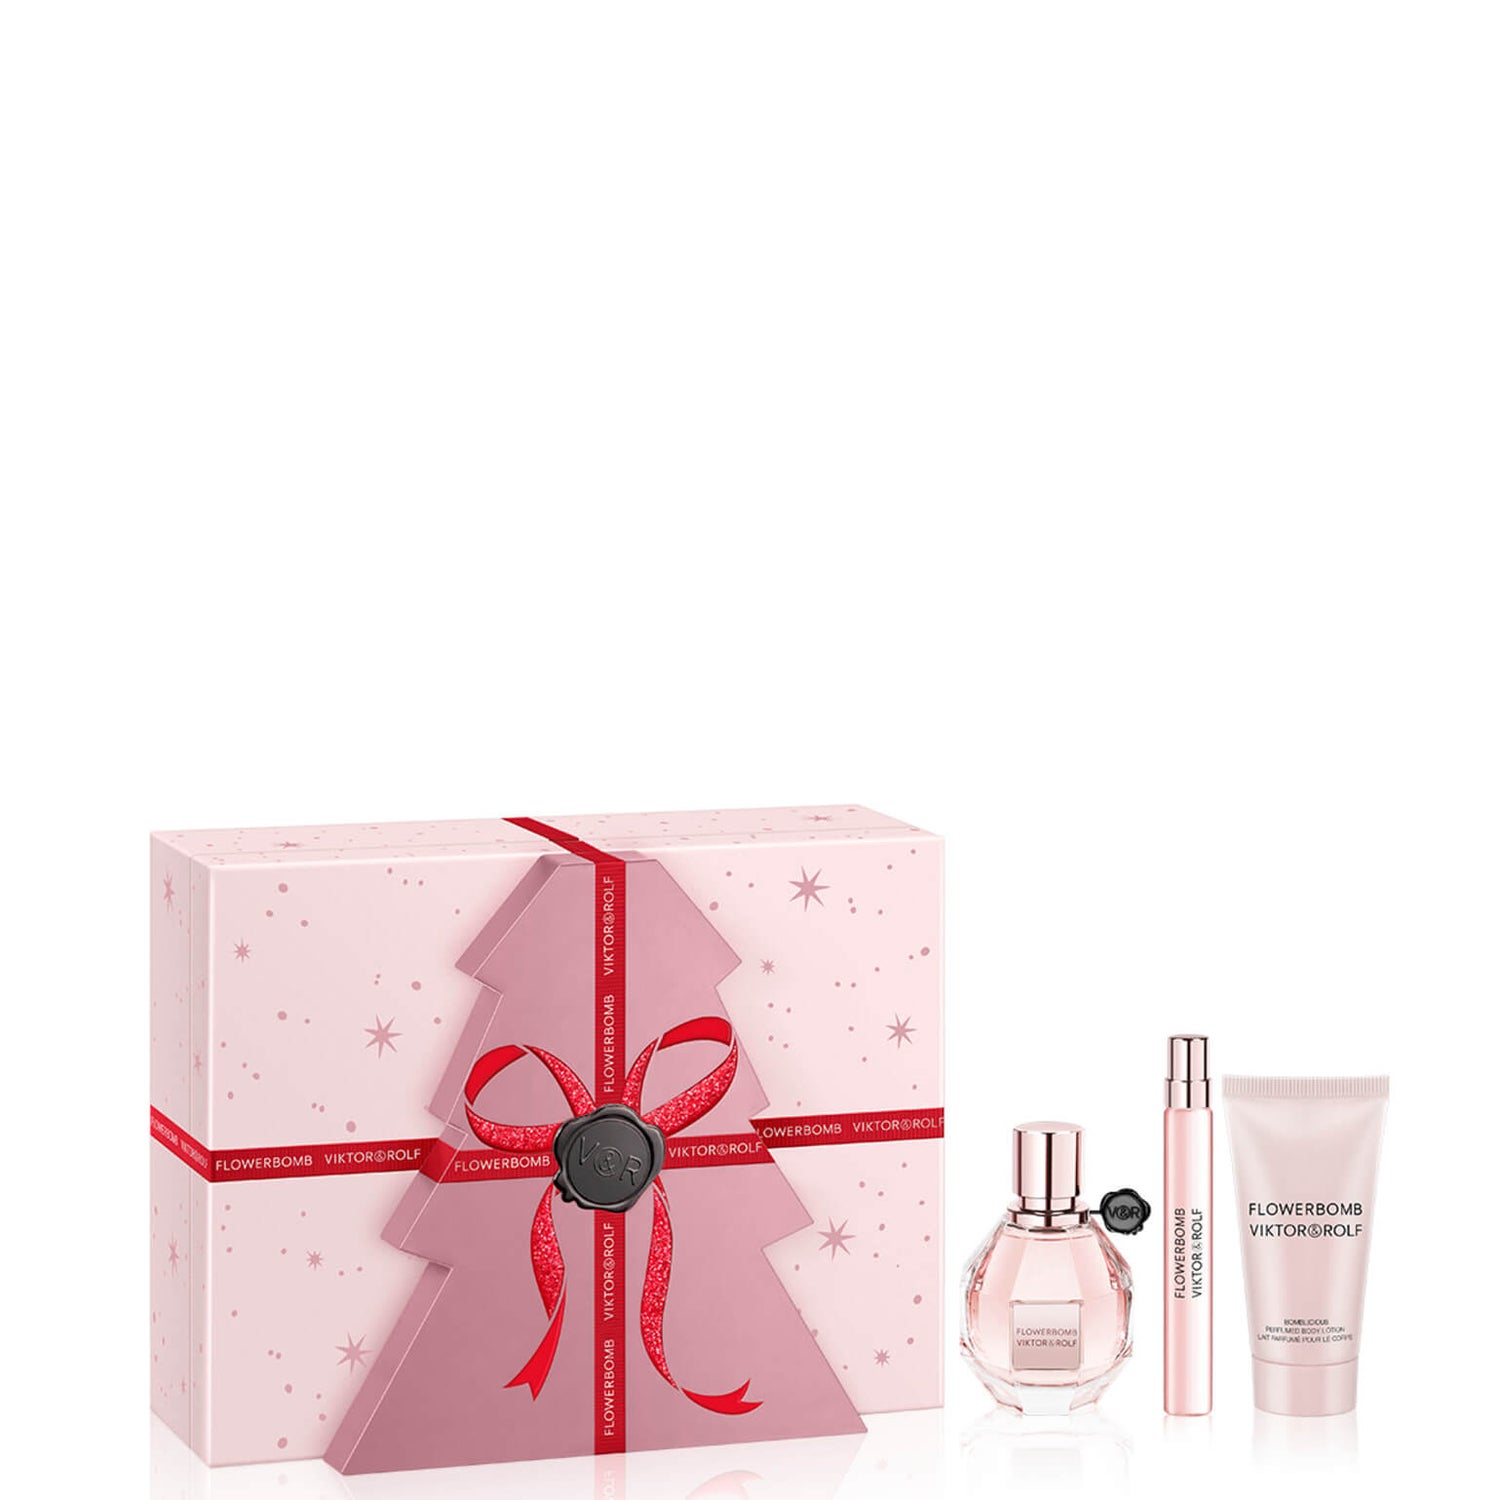 Viktor and Rolf Flowerbomb Eau de Parfum Luxury Gift Set 50ml (Worth £115.00)